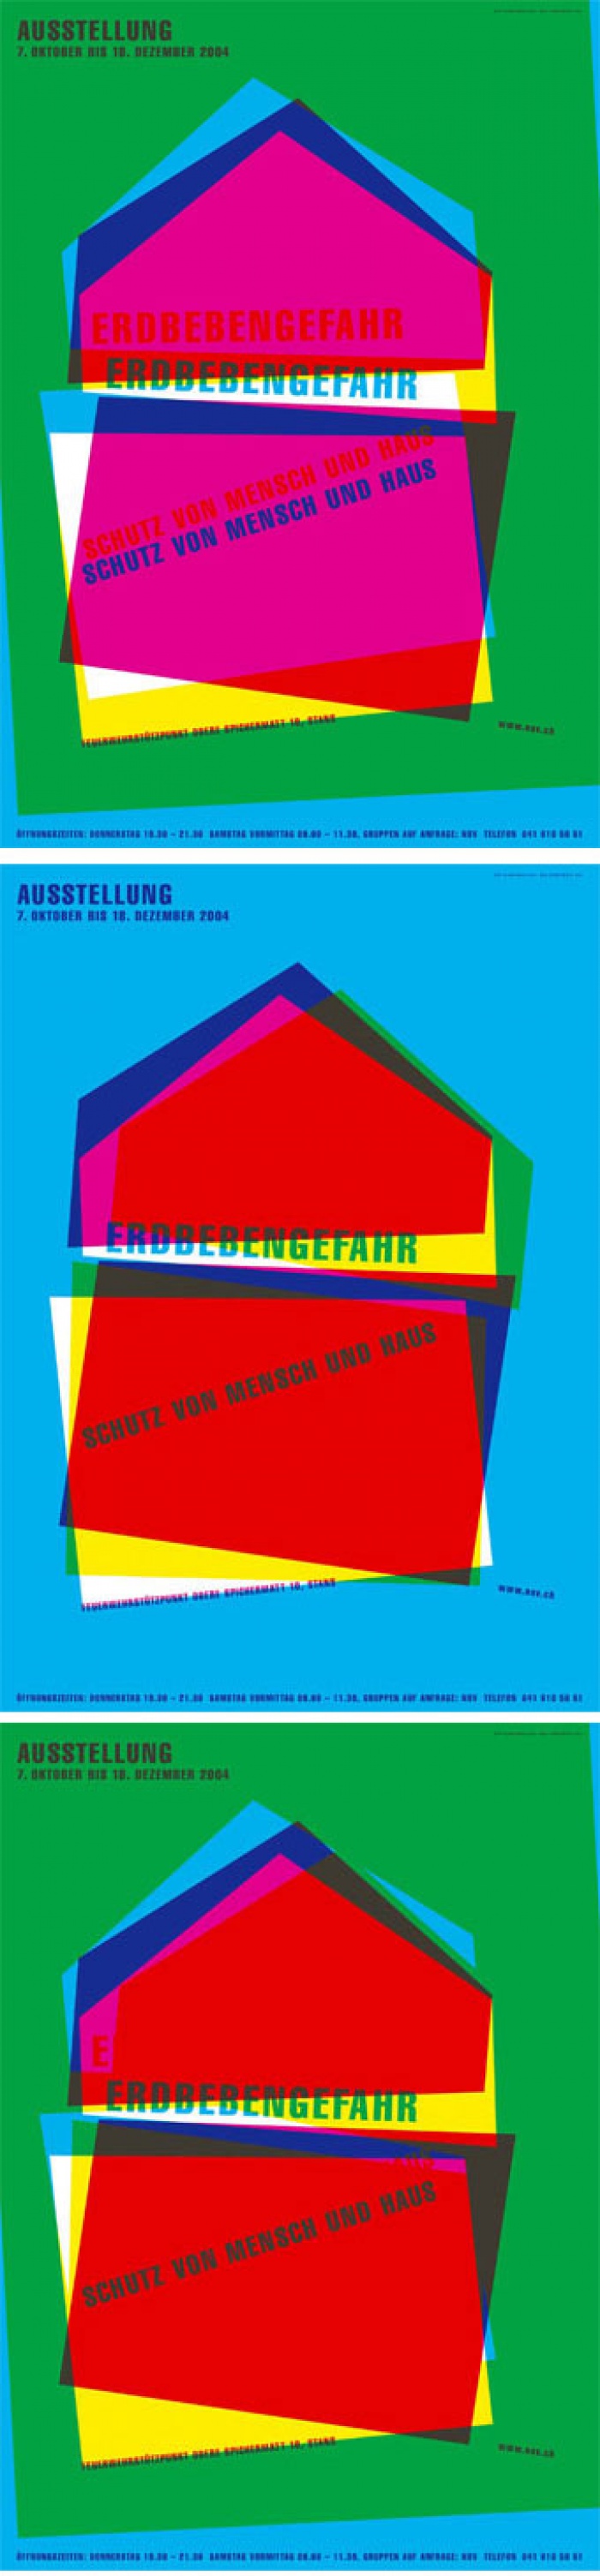 Thumbnail: Grand Prize Winner, 'Underkarl', by Niklaus Troxler (Switzerland). Above: Icograda Excellence Award, 'Earthquake Prevention Exhibition', by Imboden Melchoir (Switzerland).